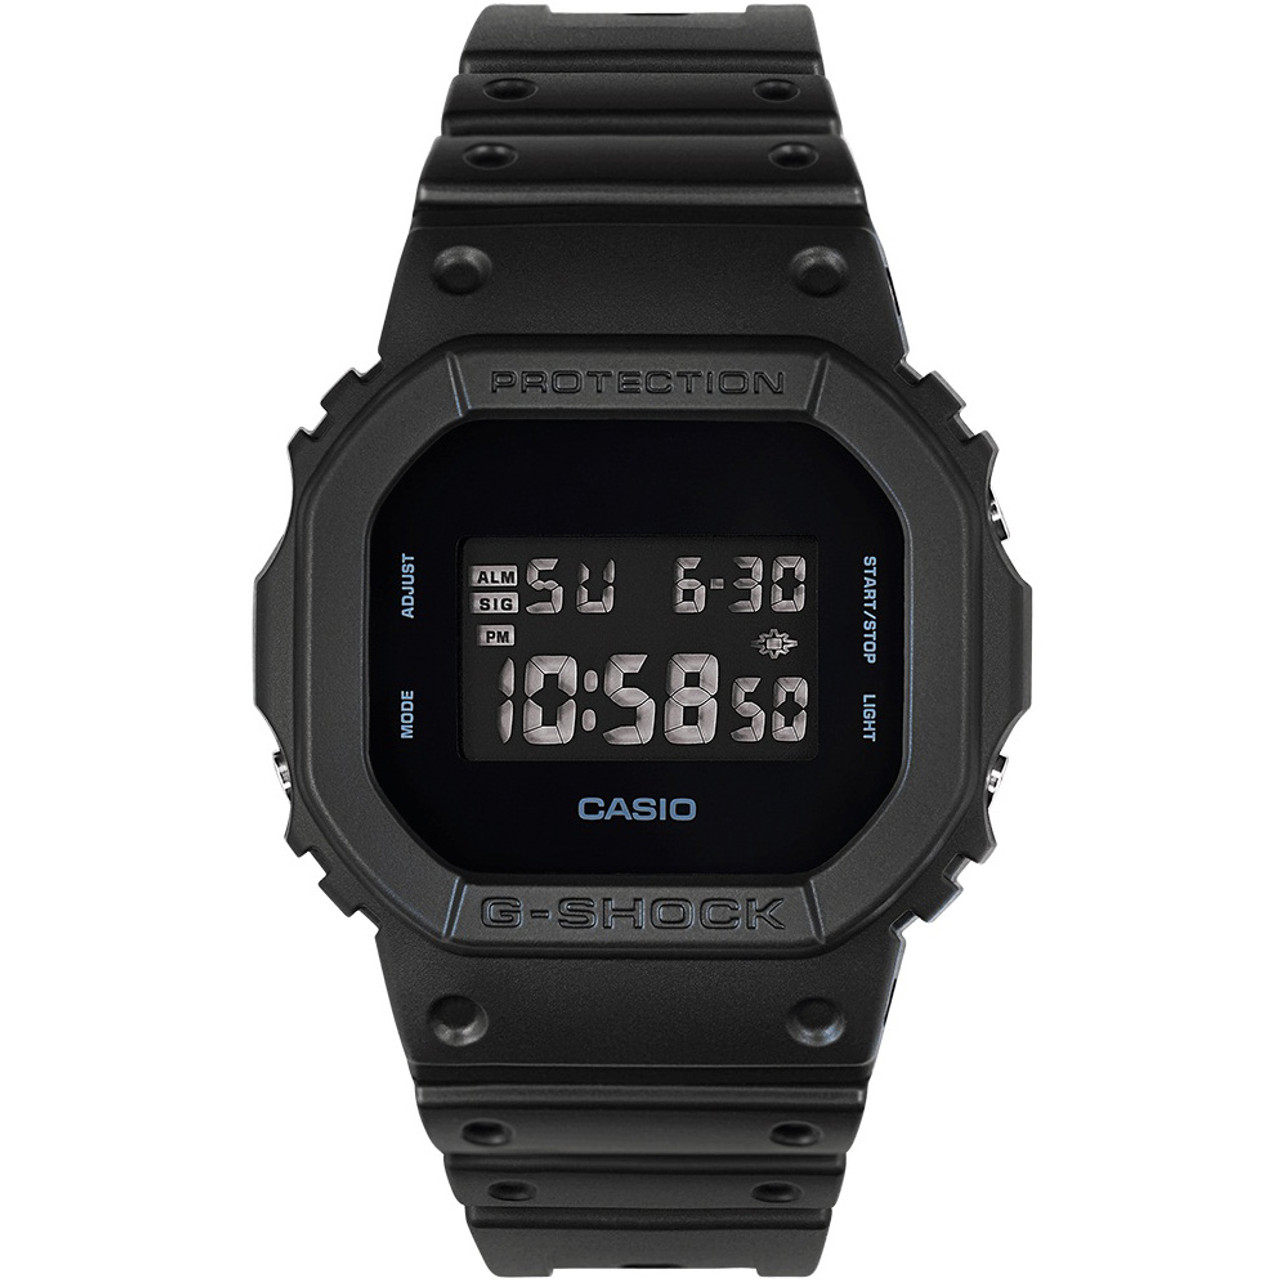 Casio G-shock Stopwatch Black Strap Watch DW-5600BB-1ER